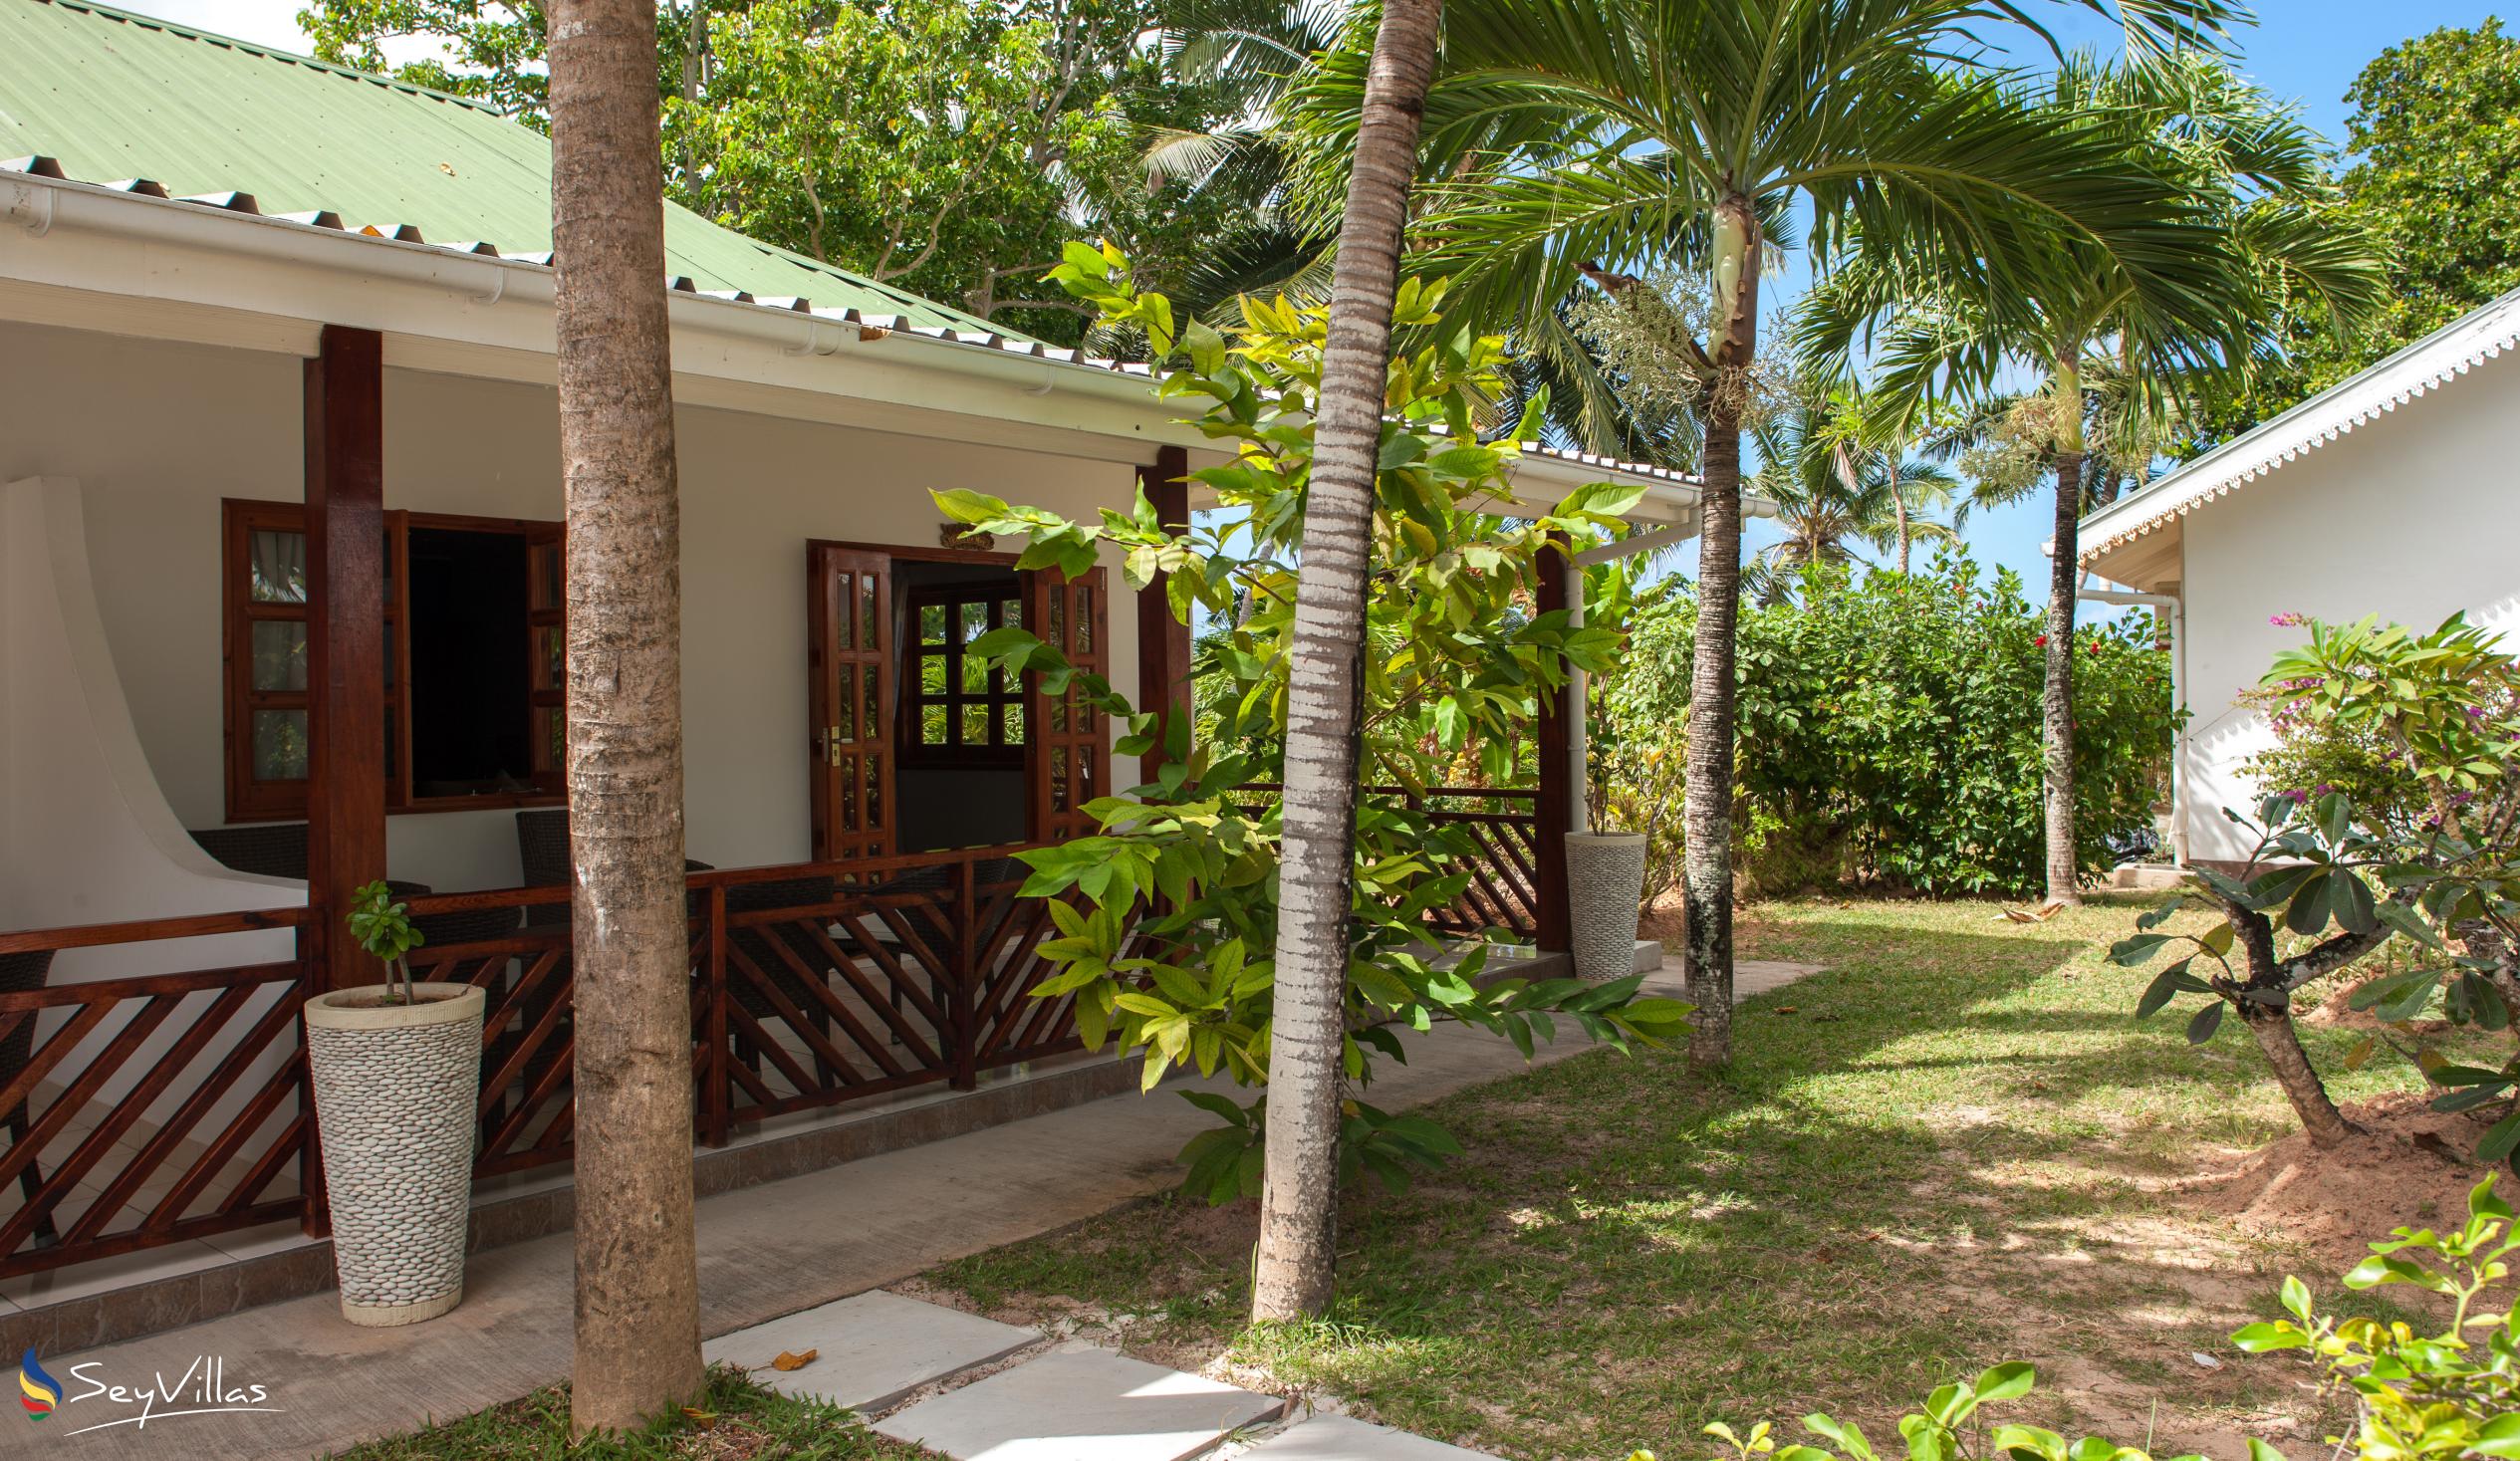 Foto 14: Villas de Mer - Extérieur - Praslin (Seychelles)